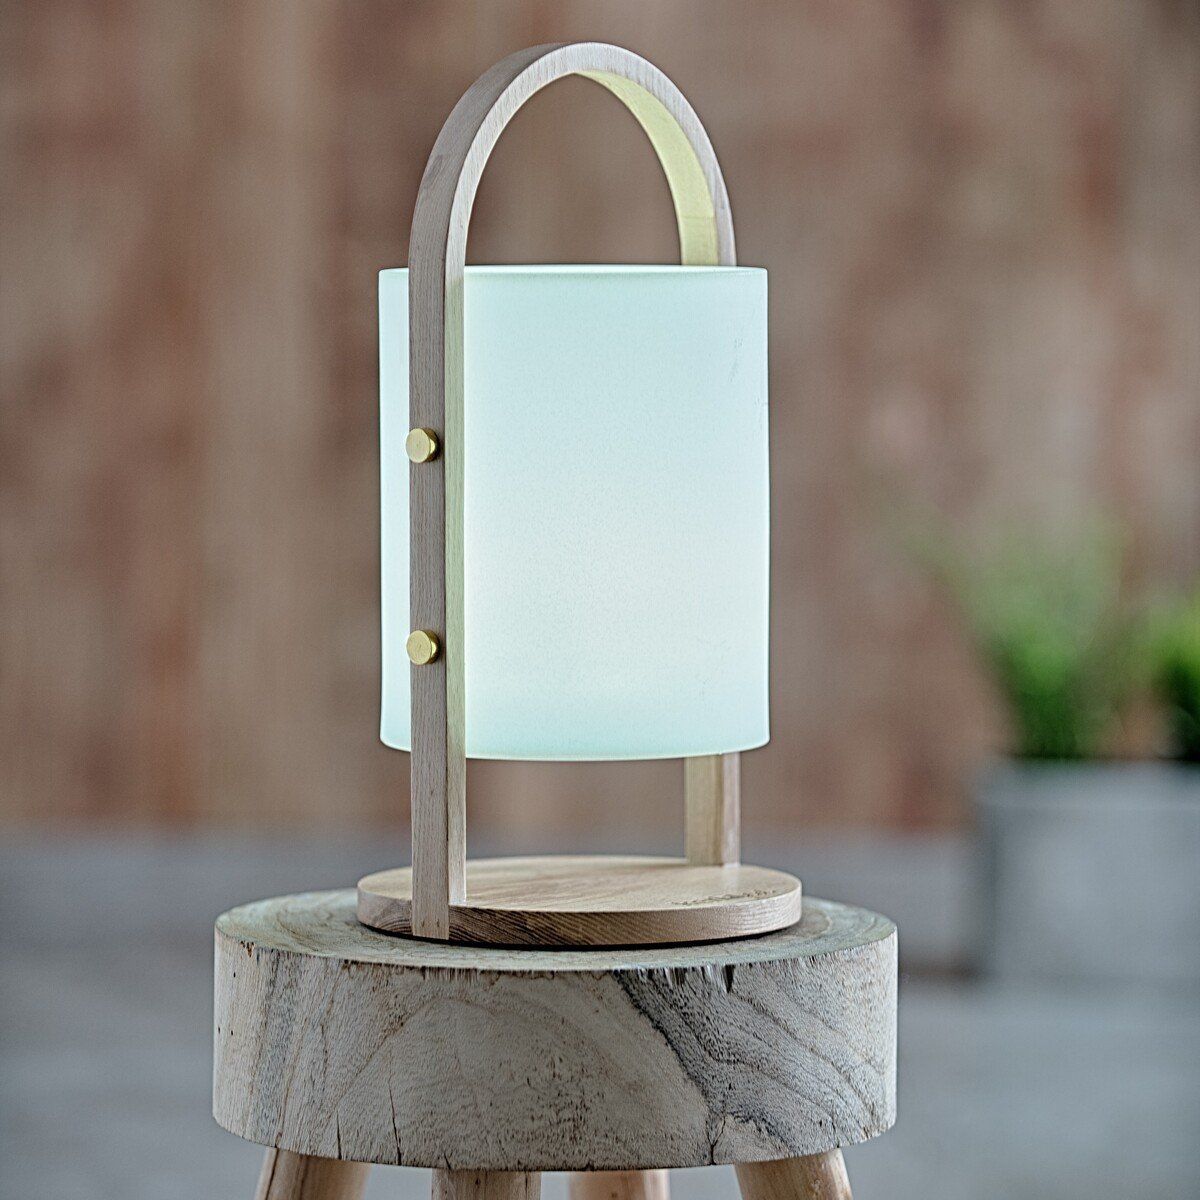 Lampe LED nomade sans fil FOREST blanche en bois et polyéthylène